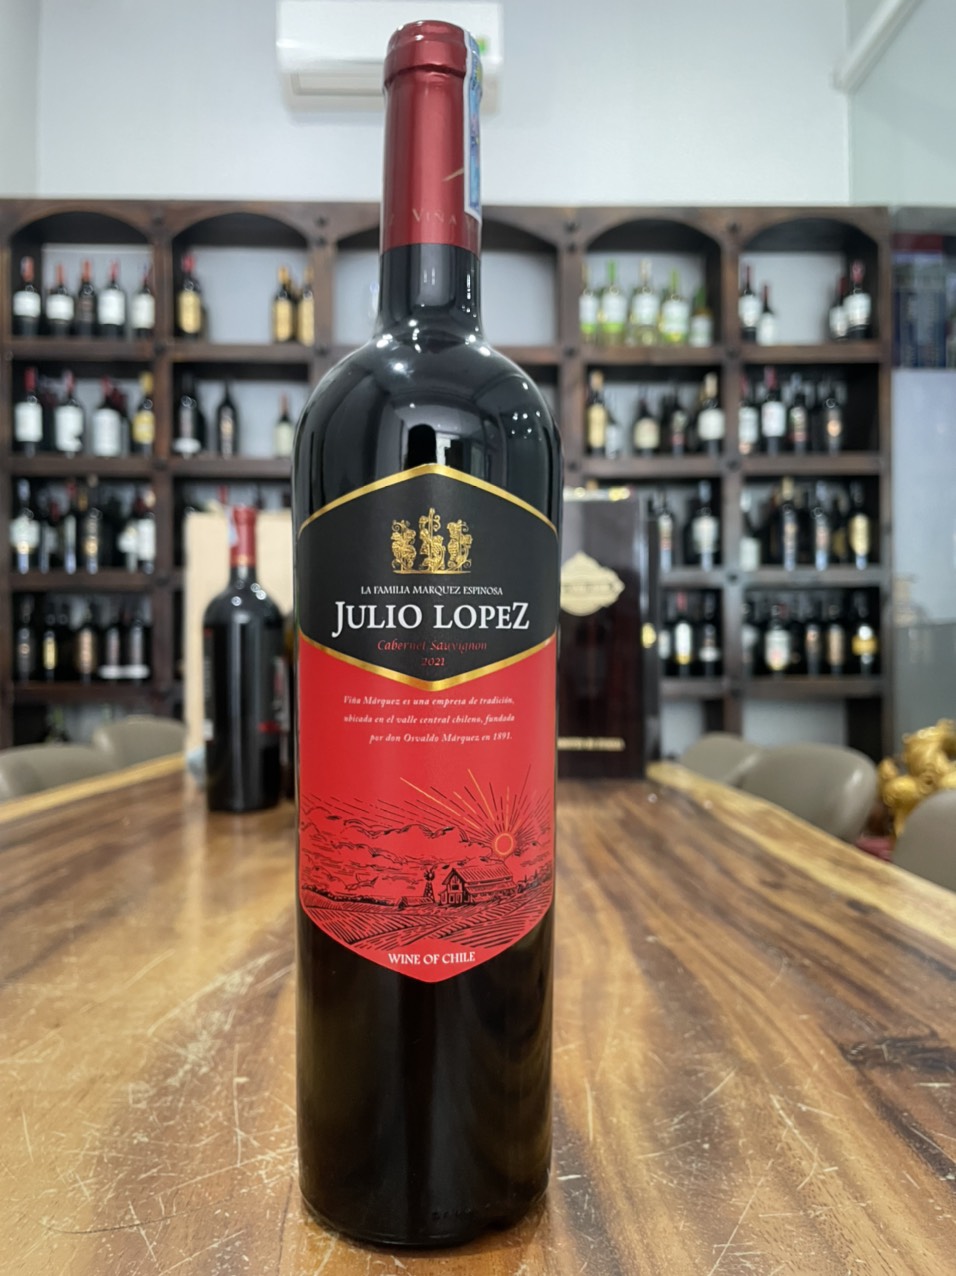 [Set quà tặng] Hộp gỗ 6 chai rượu vang Chile Julio Lopez